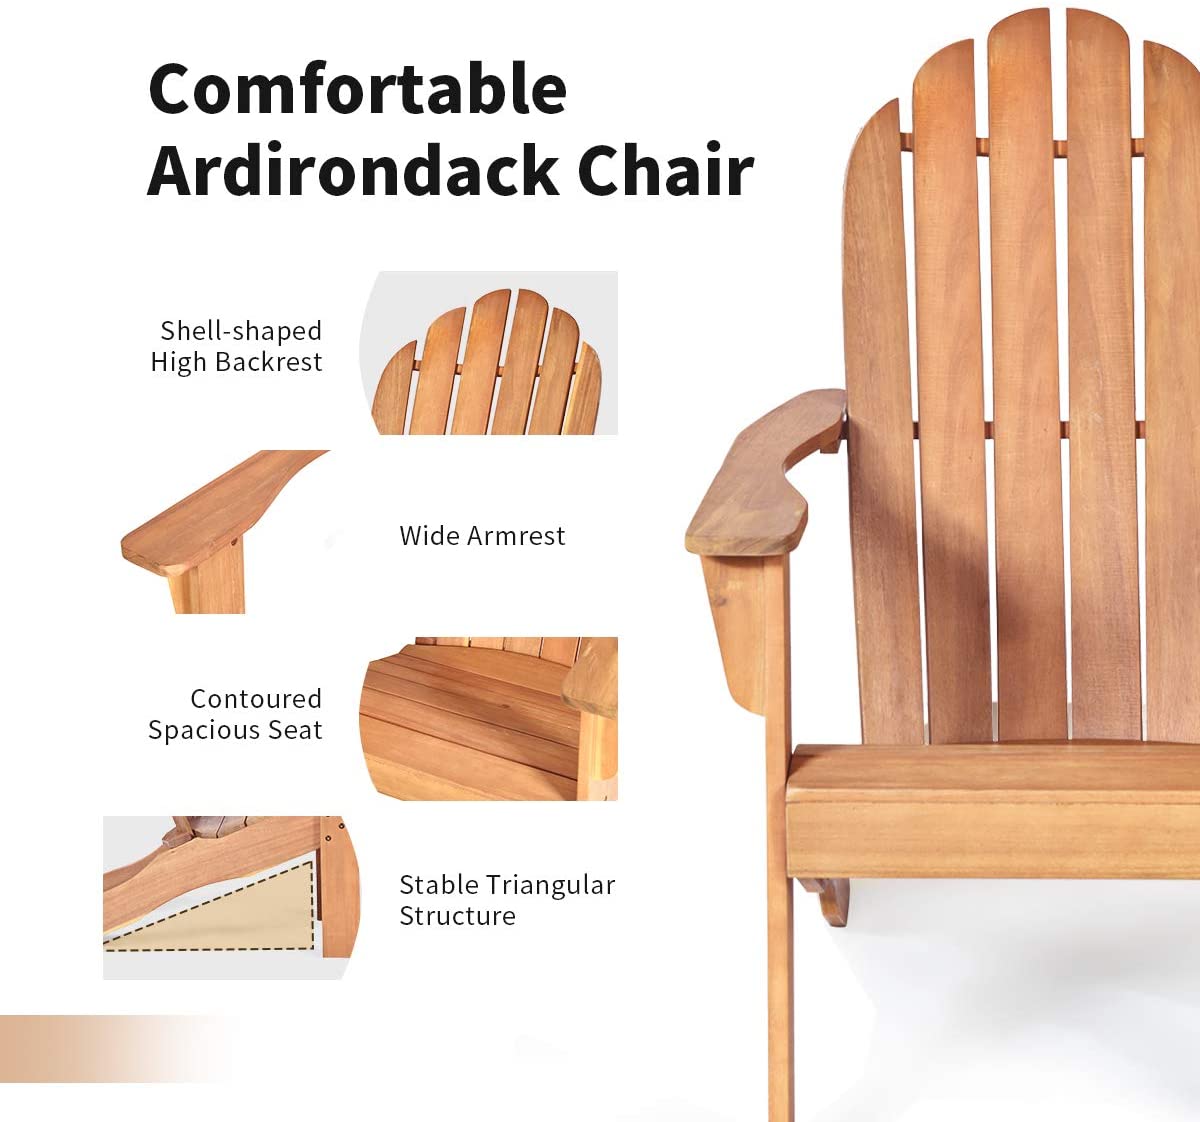 Giantex Adirondack Chair Outdoor Wooden W/Ergonomic Design Acacia Chair for Yard